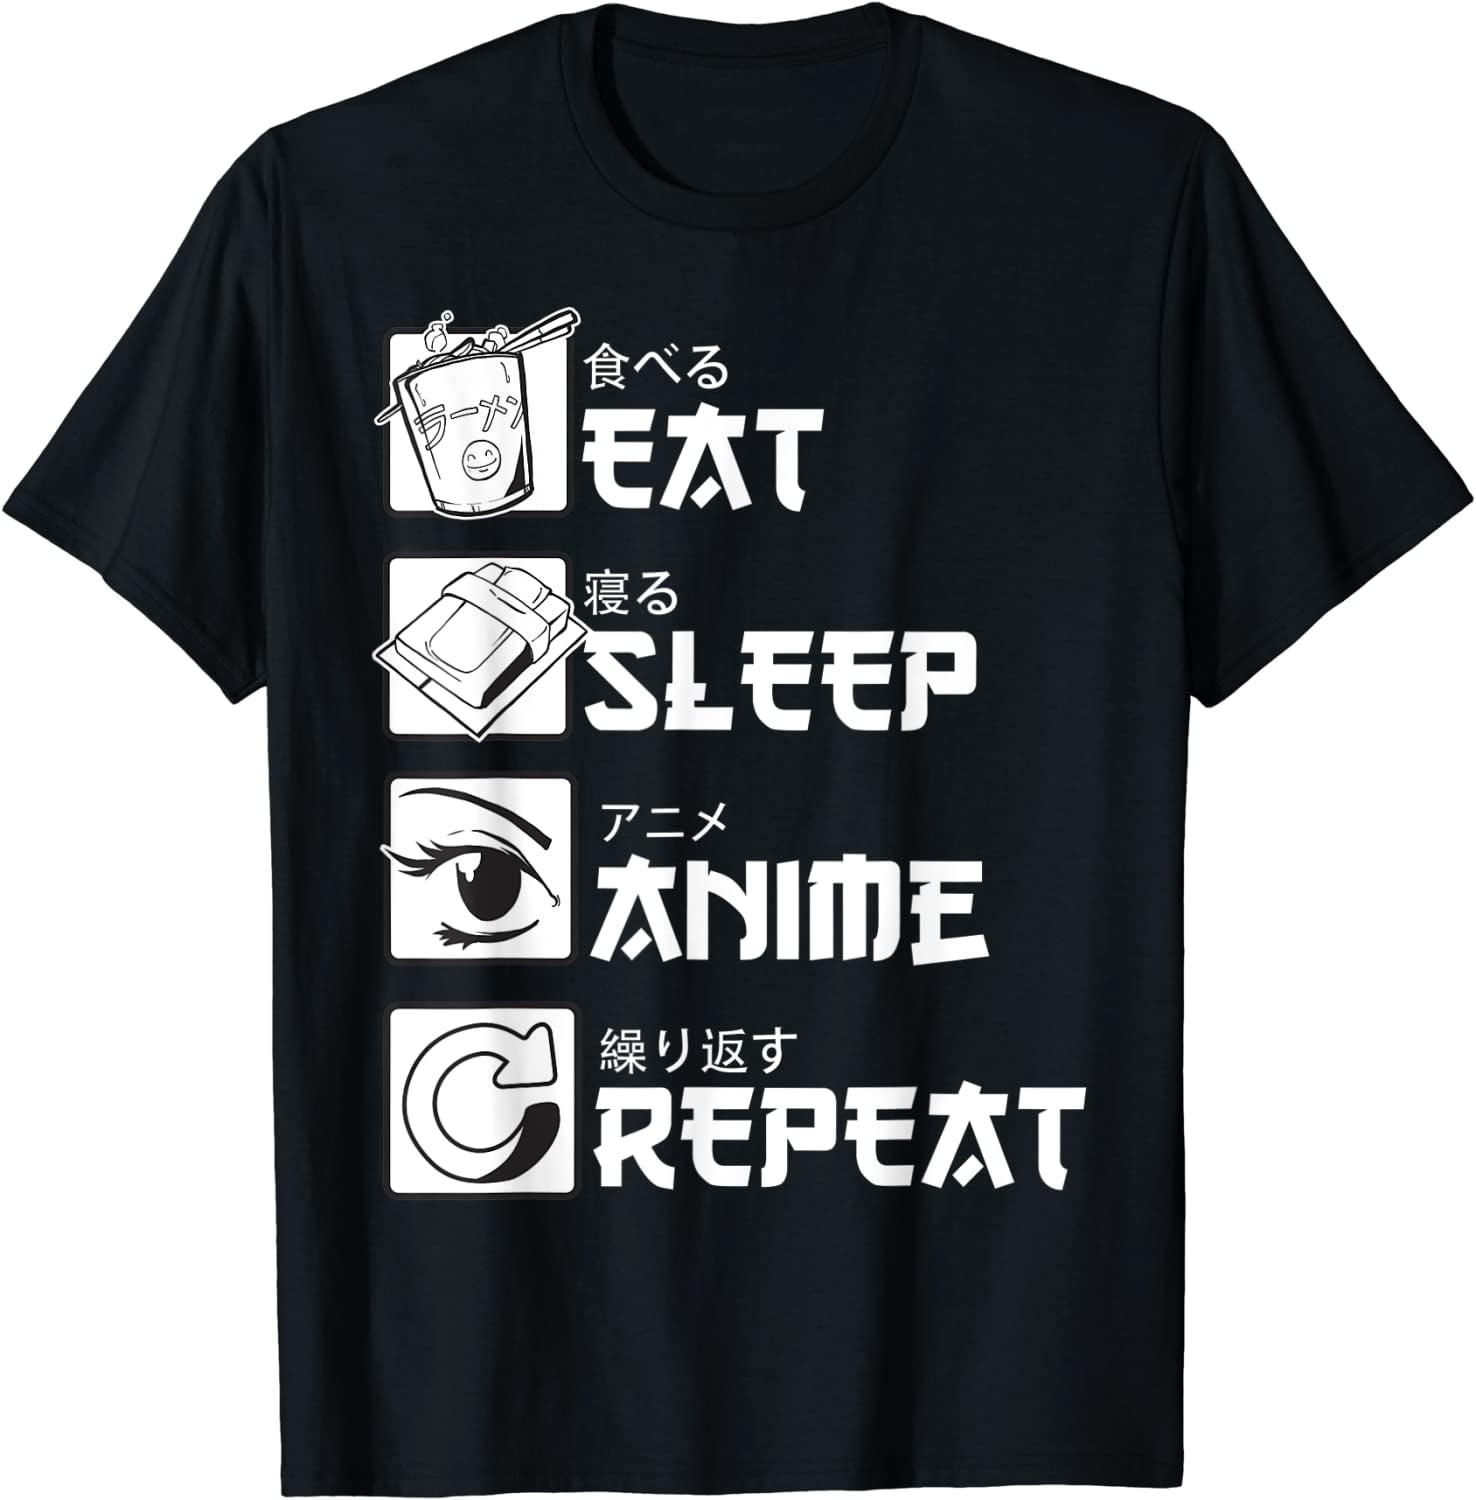 walmart new anime shirtTikTok Search